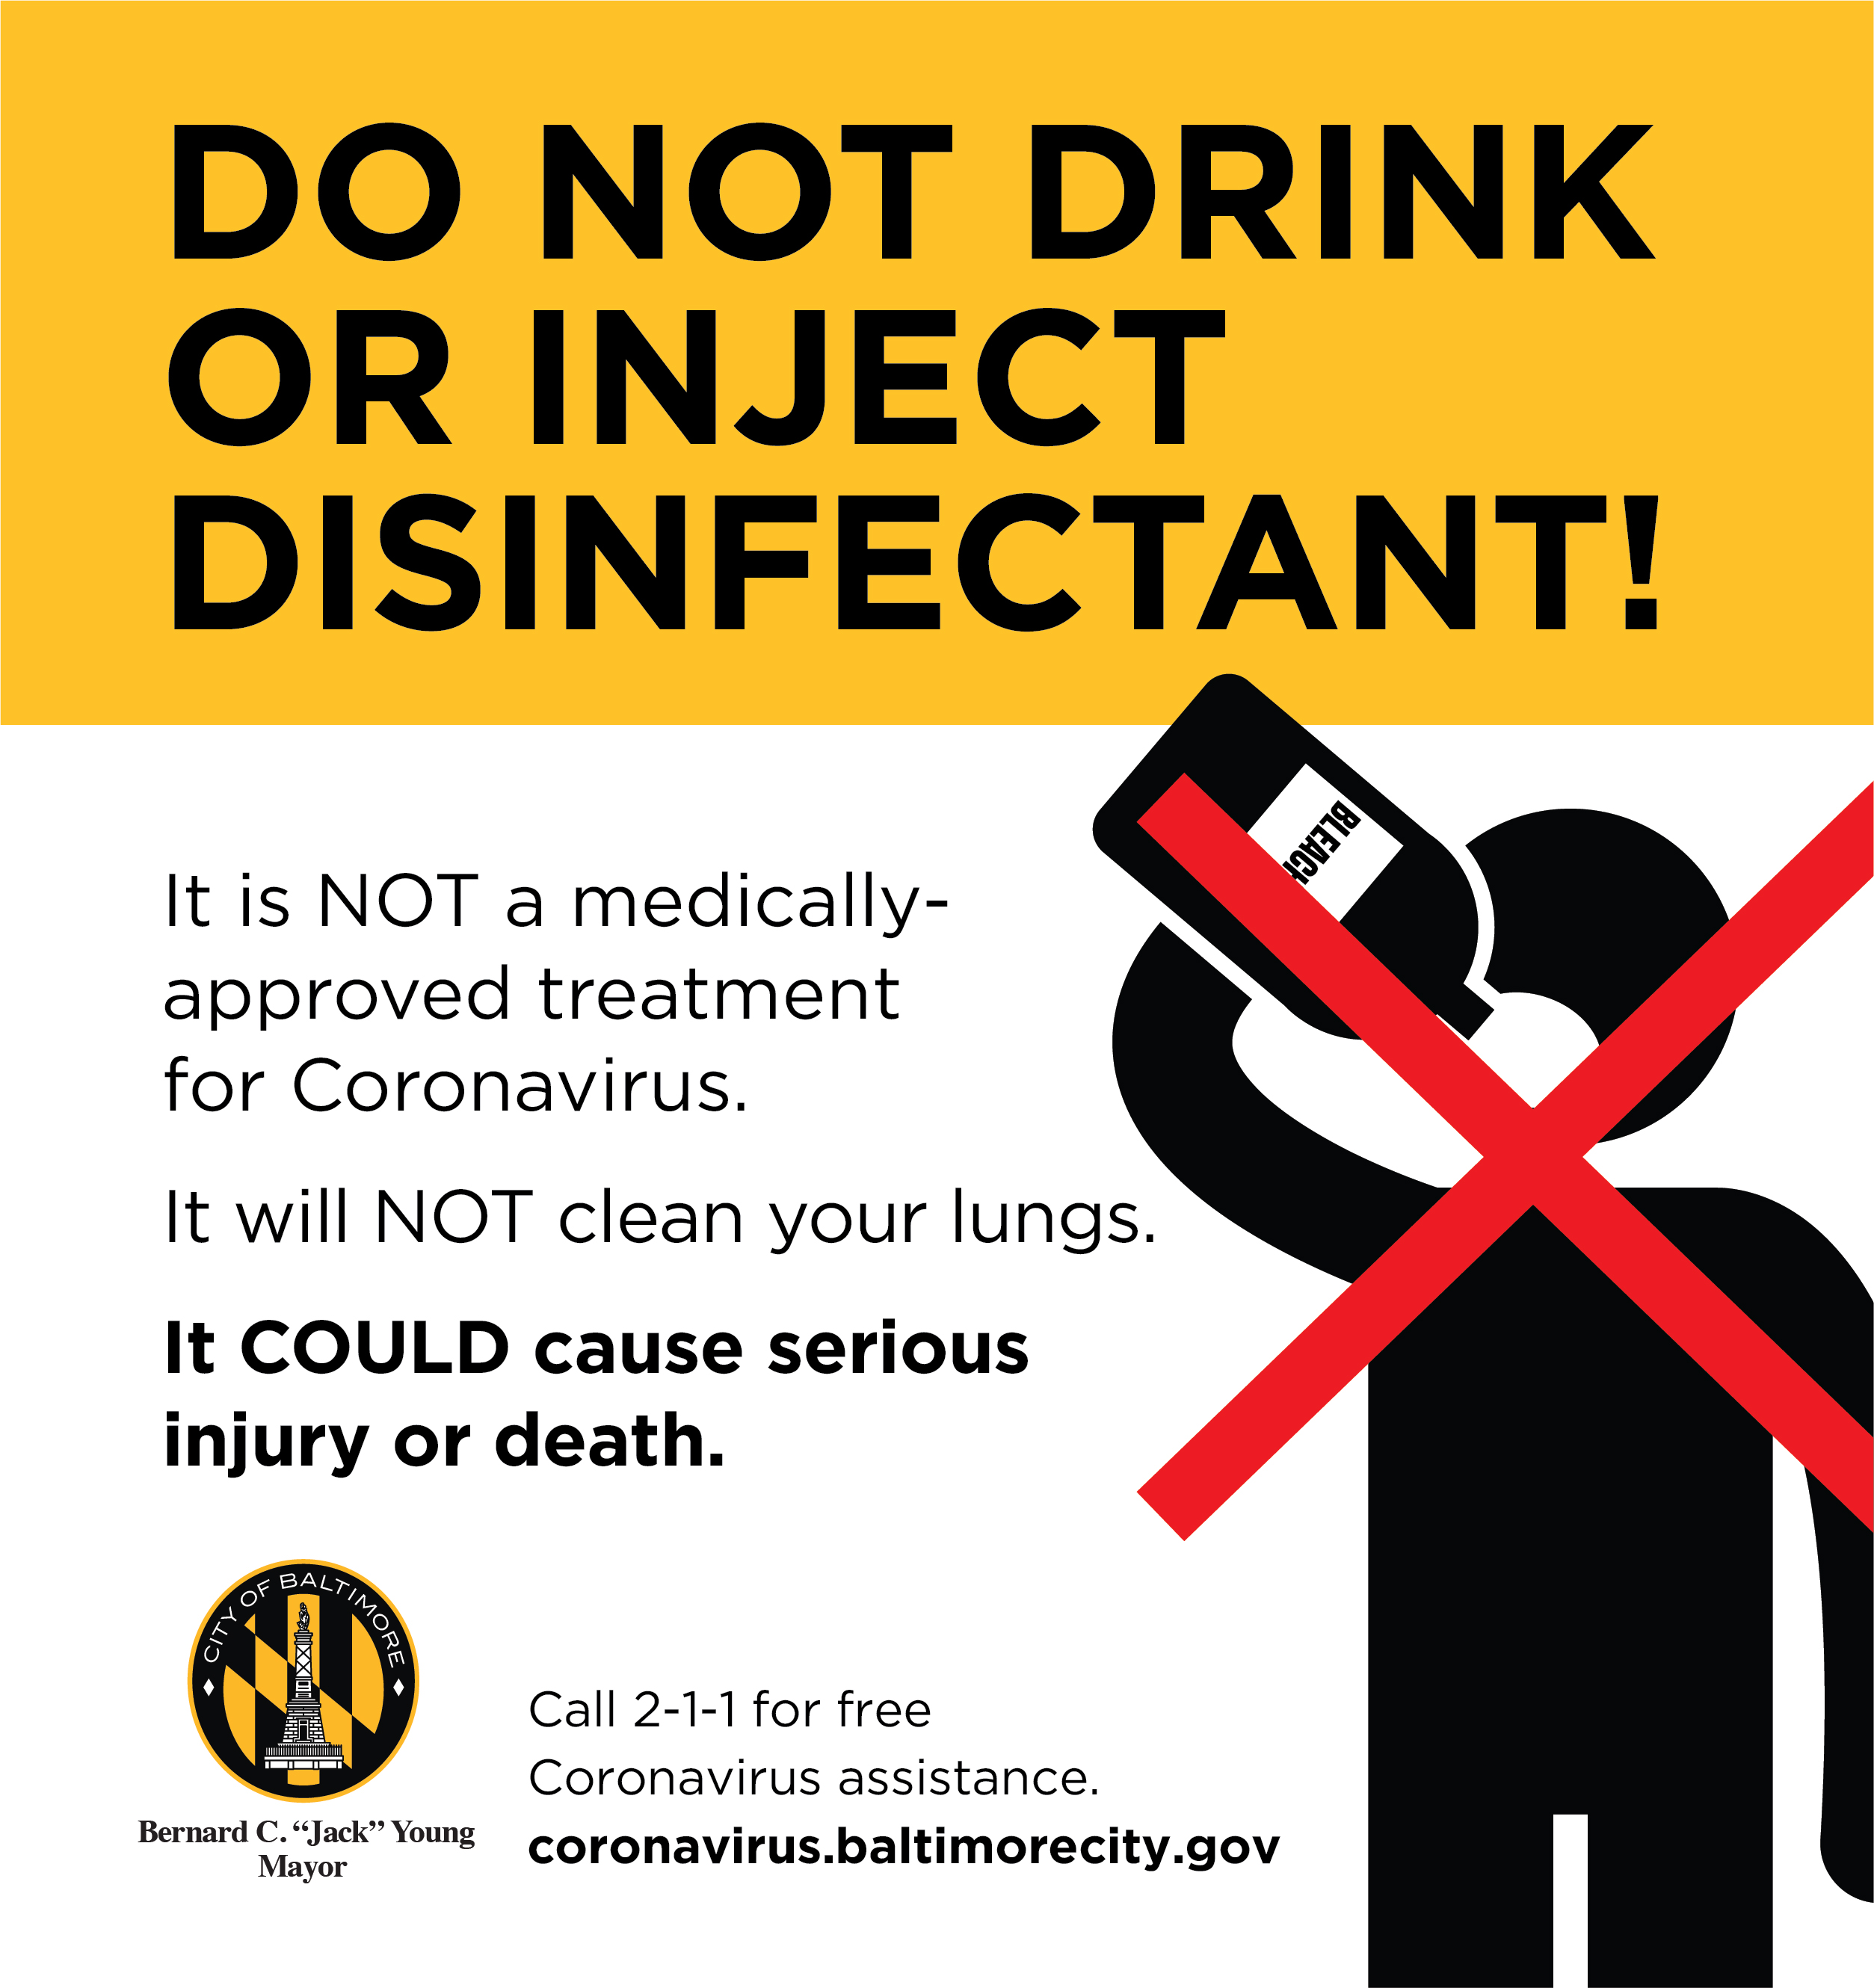 Do not drink or inject disinfectant. Visit coronavirus.baltimorecity.gov for more information. 